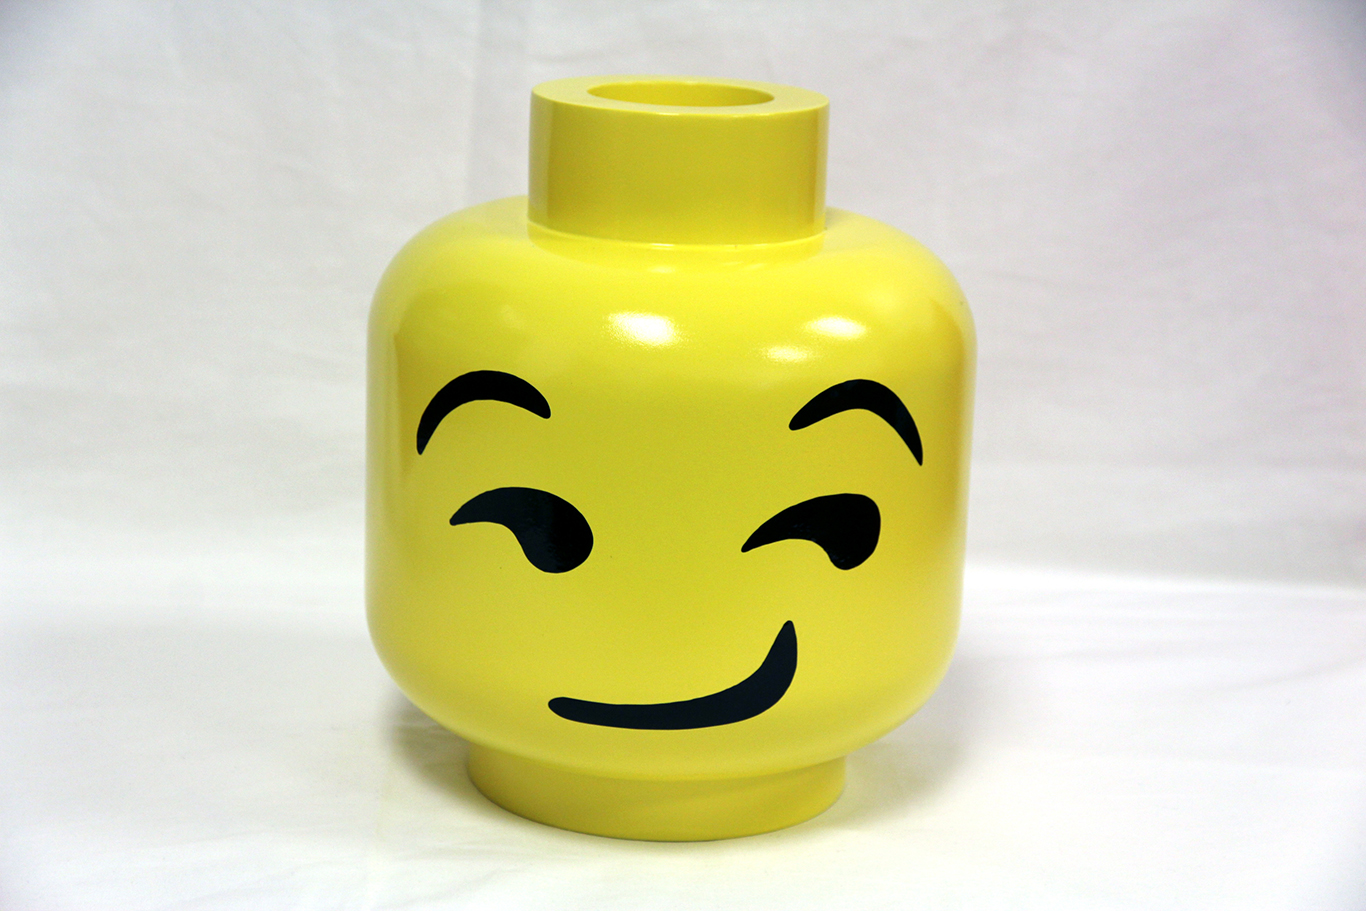 Copy of Lego Head